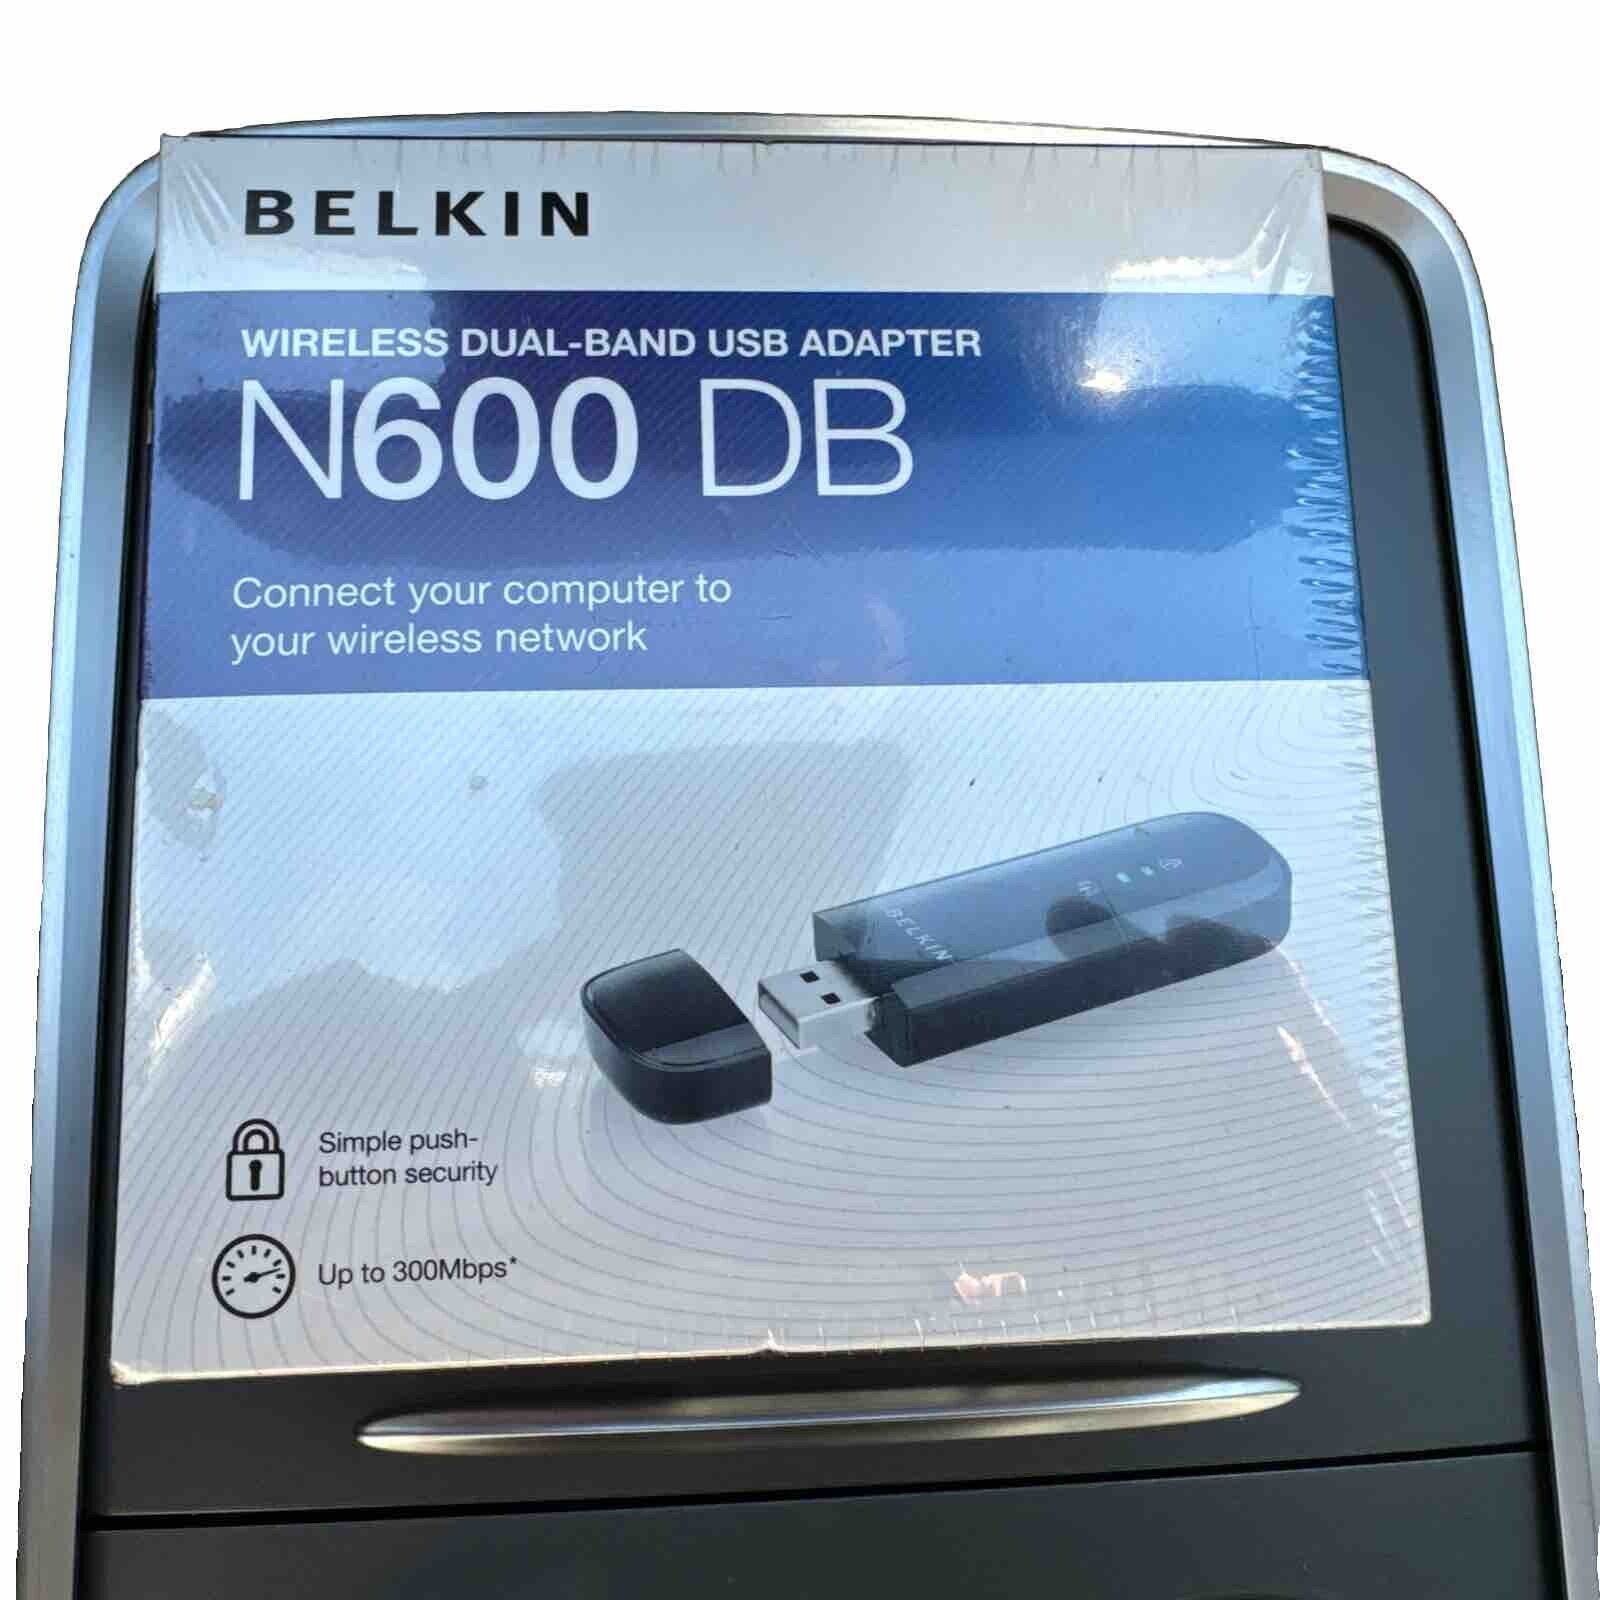 Belkin N600 DB Wireless Dual-Band USB Adapter laptop or desktop computer 